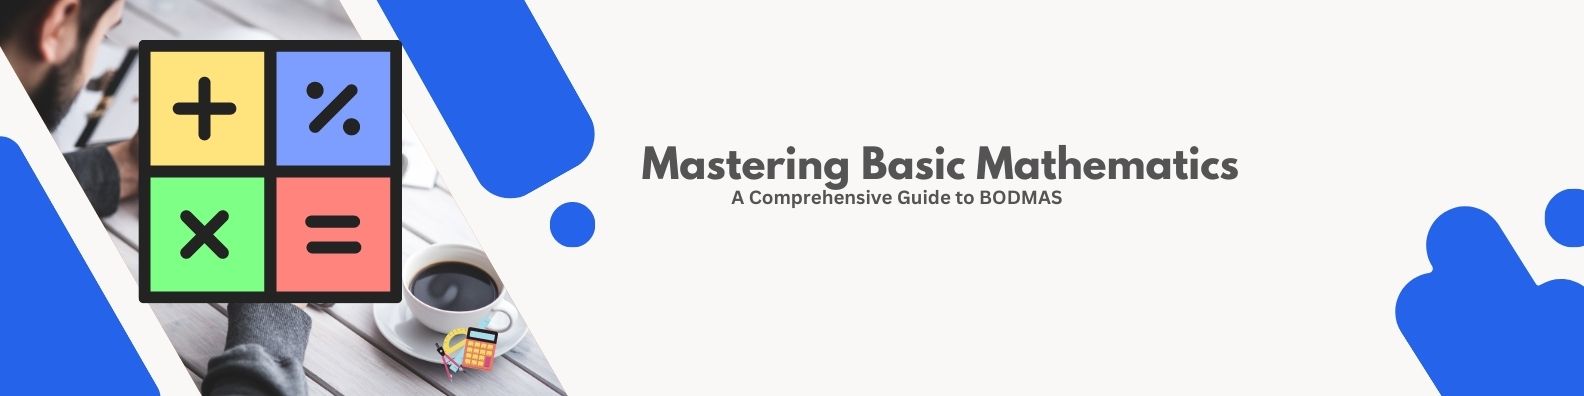 Mastering Basic Mathematics a Comprehensive Guide to BODMAS